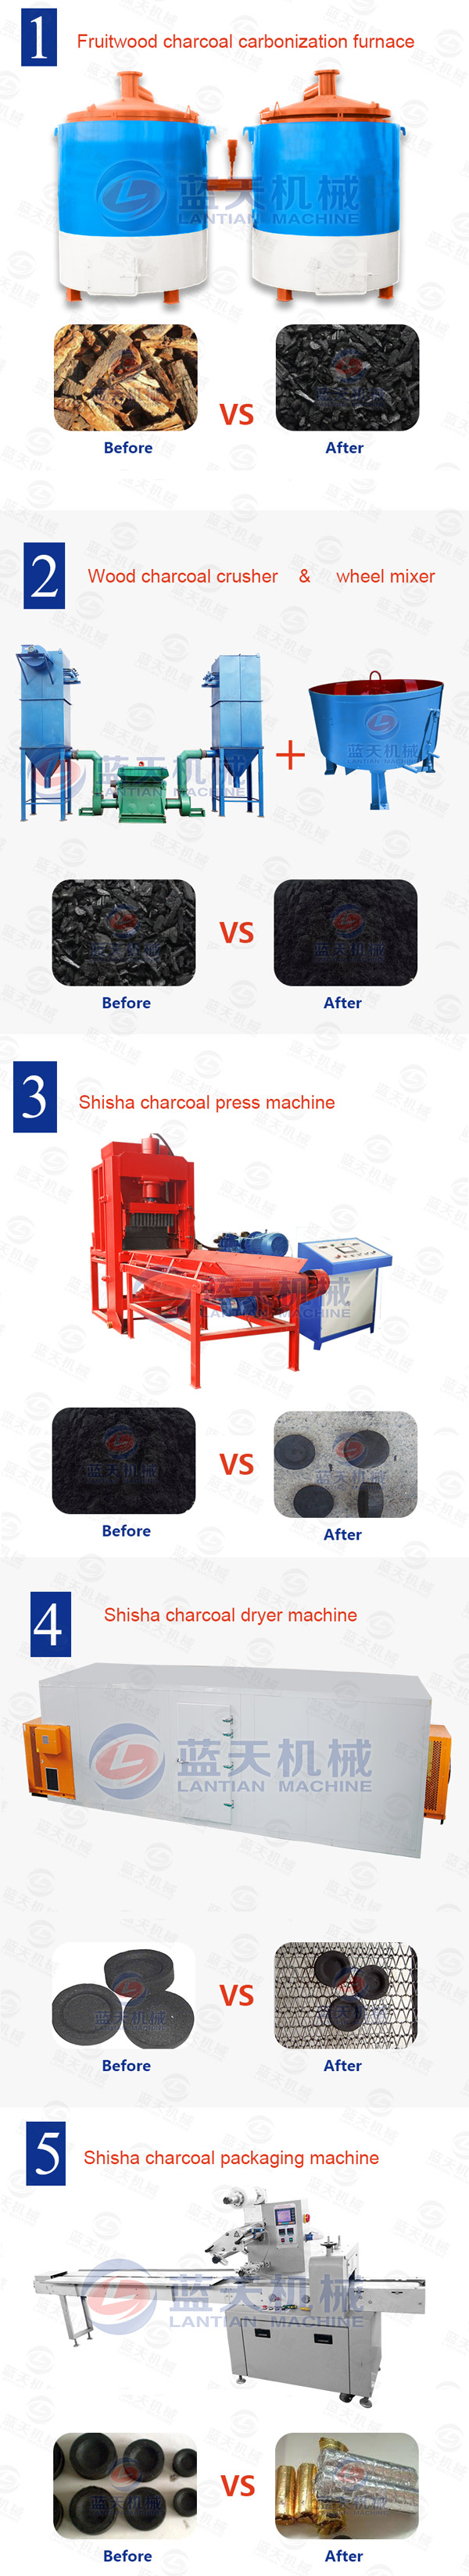 shisha charcoal packing machine